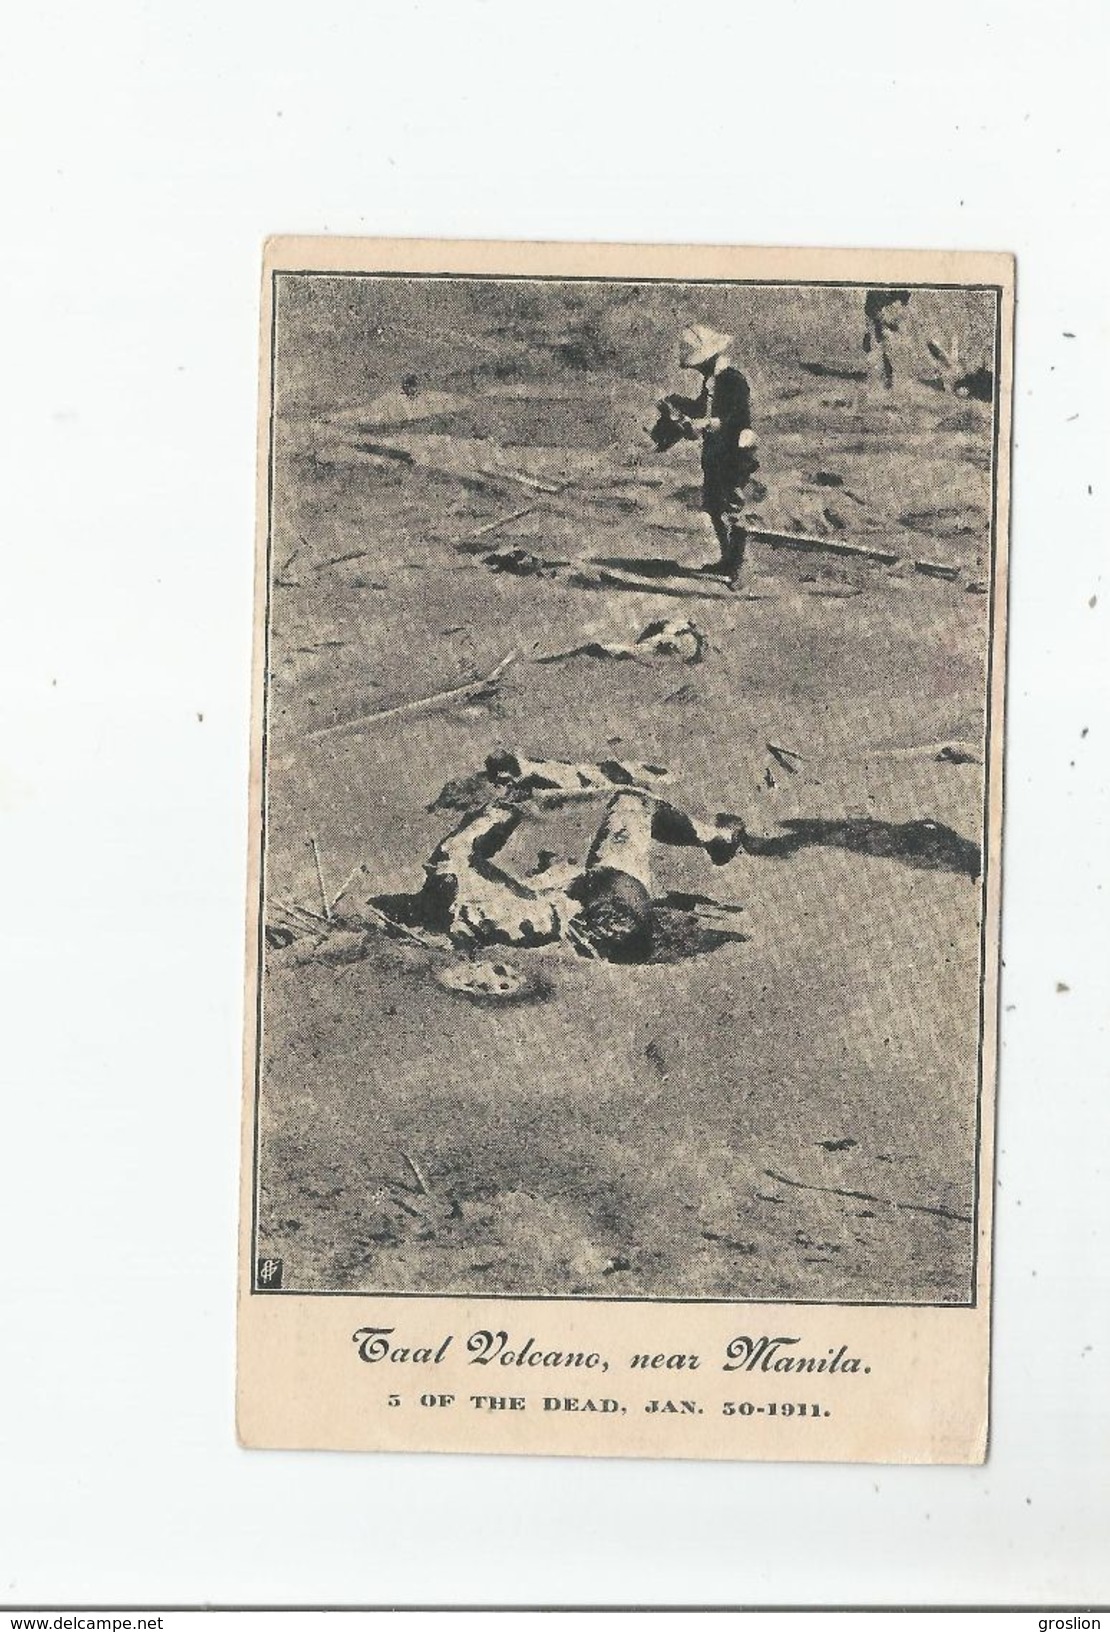 TAAL VOLCANO NEAR MANILA 3 OF THE DEAD JAN 30.1911 - Philippines